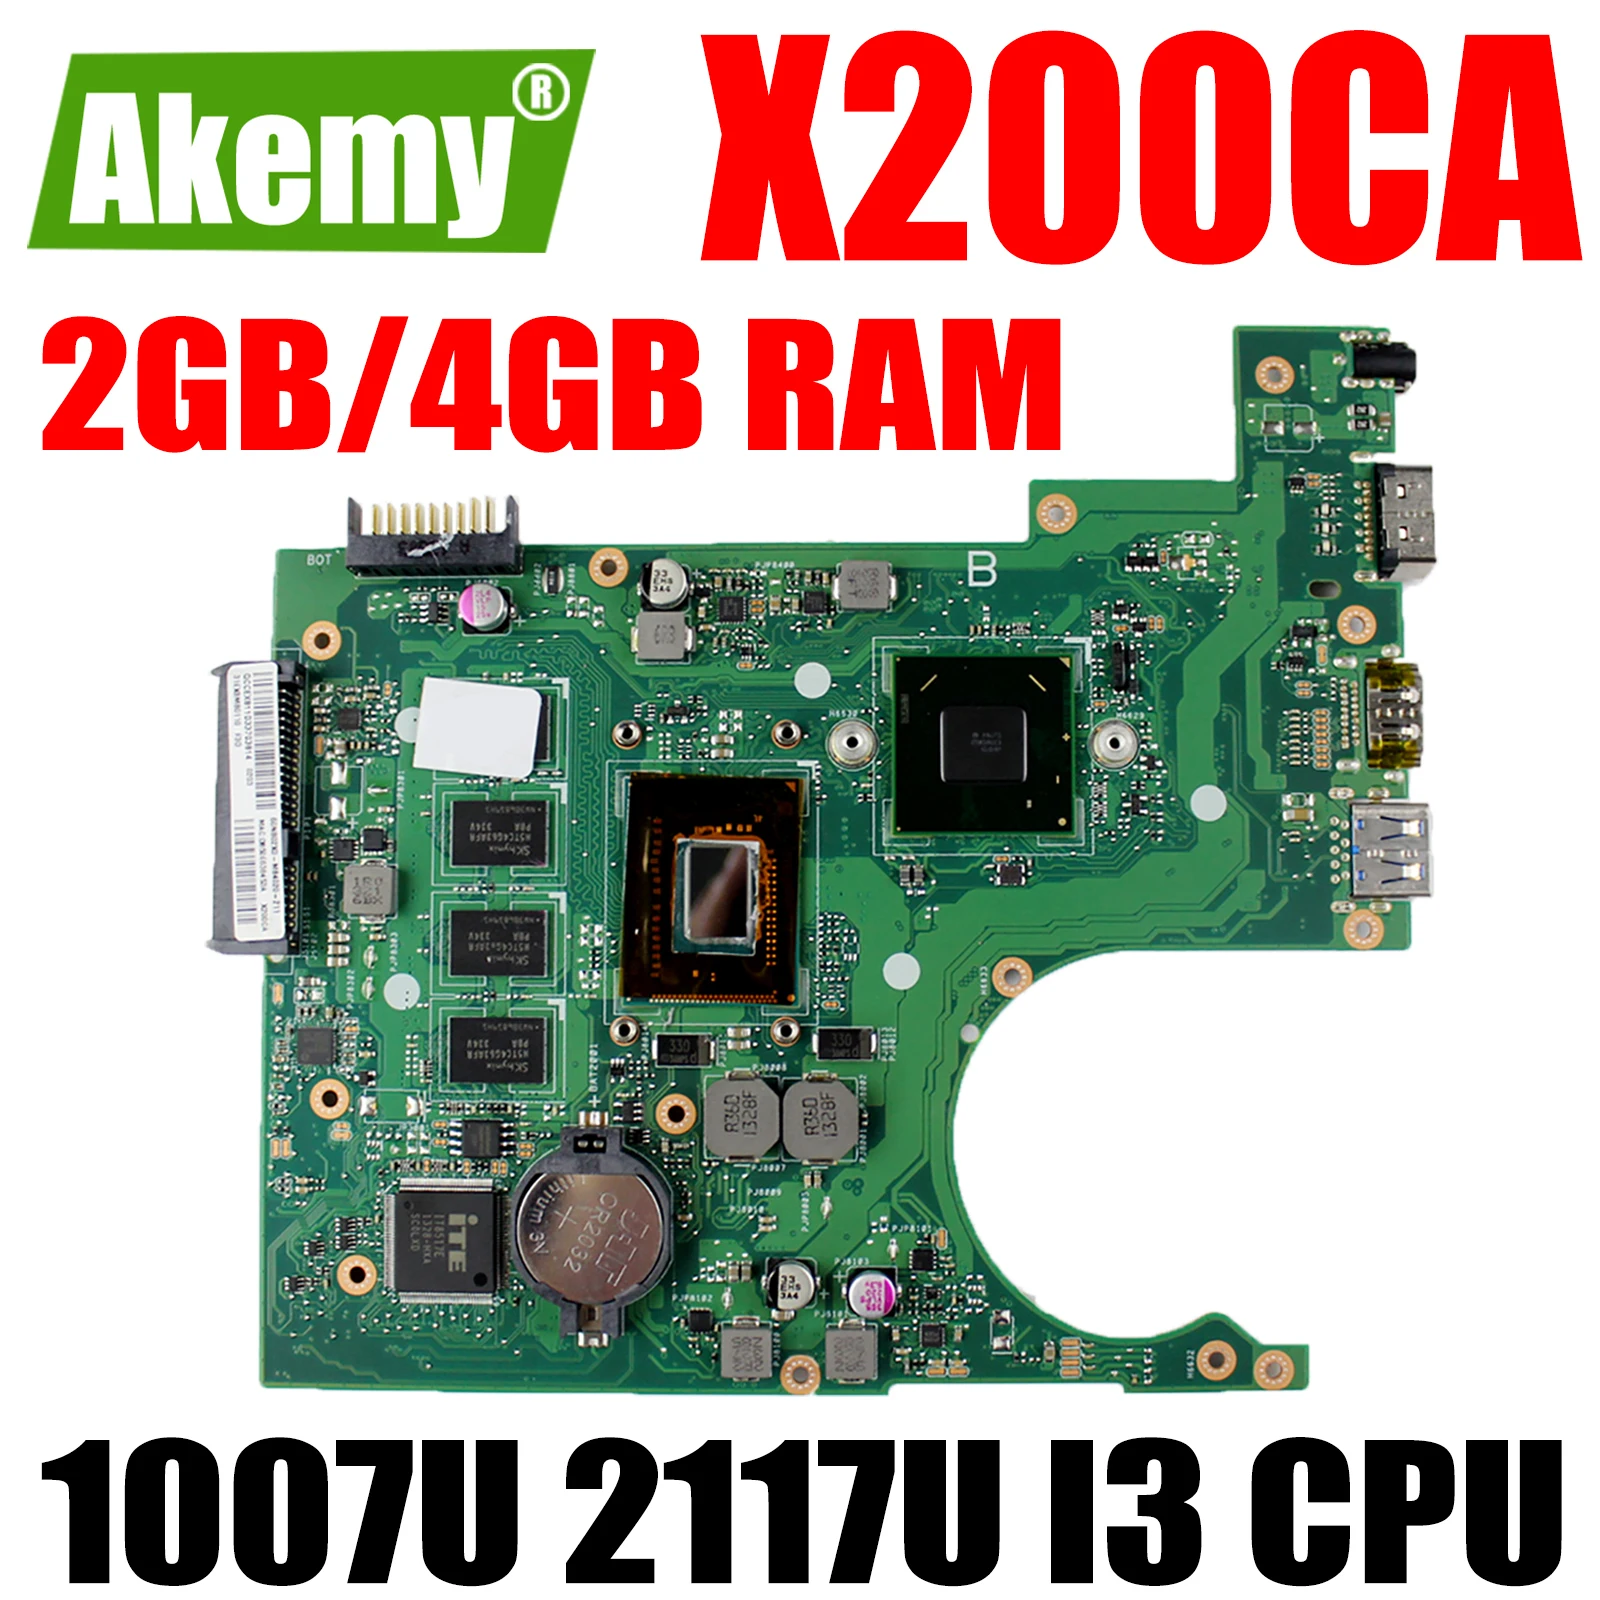 

X200CA Laptop Motherboard 1007U 2117U I3-3th Gen CPU 2GB 4GB RAM for ASUS X200CA X200CAP Notebook Motherboard Mainboard